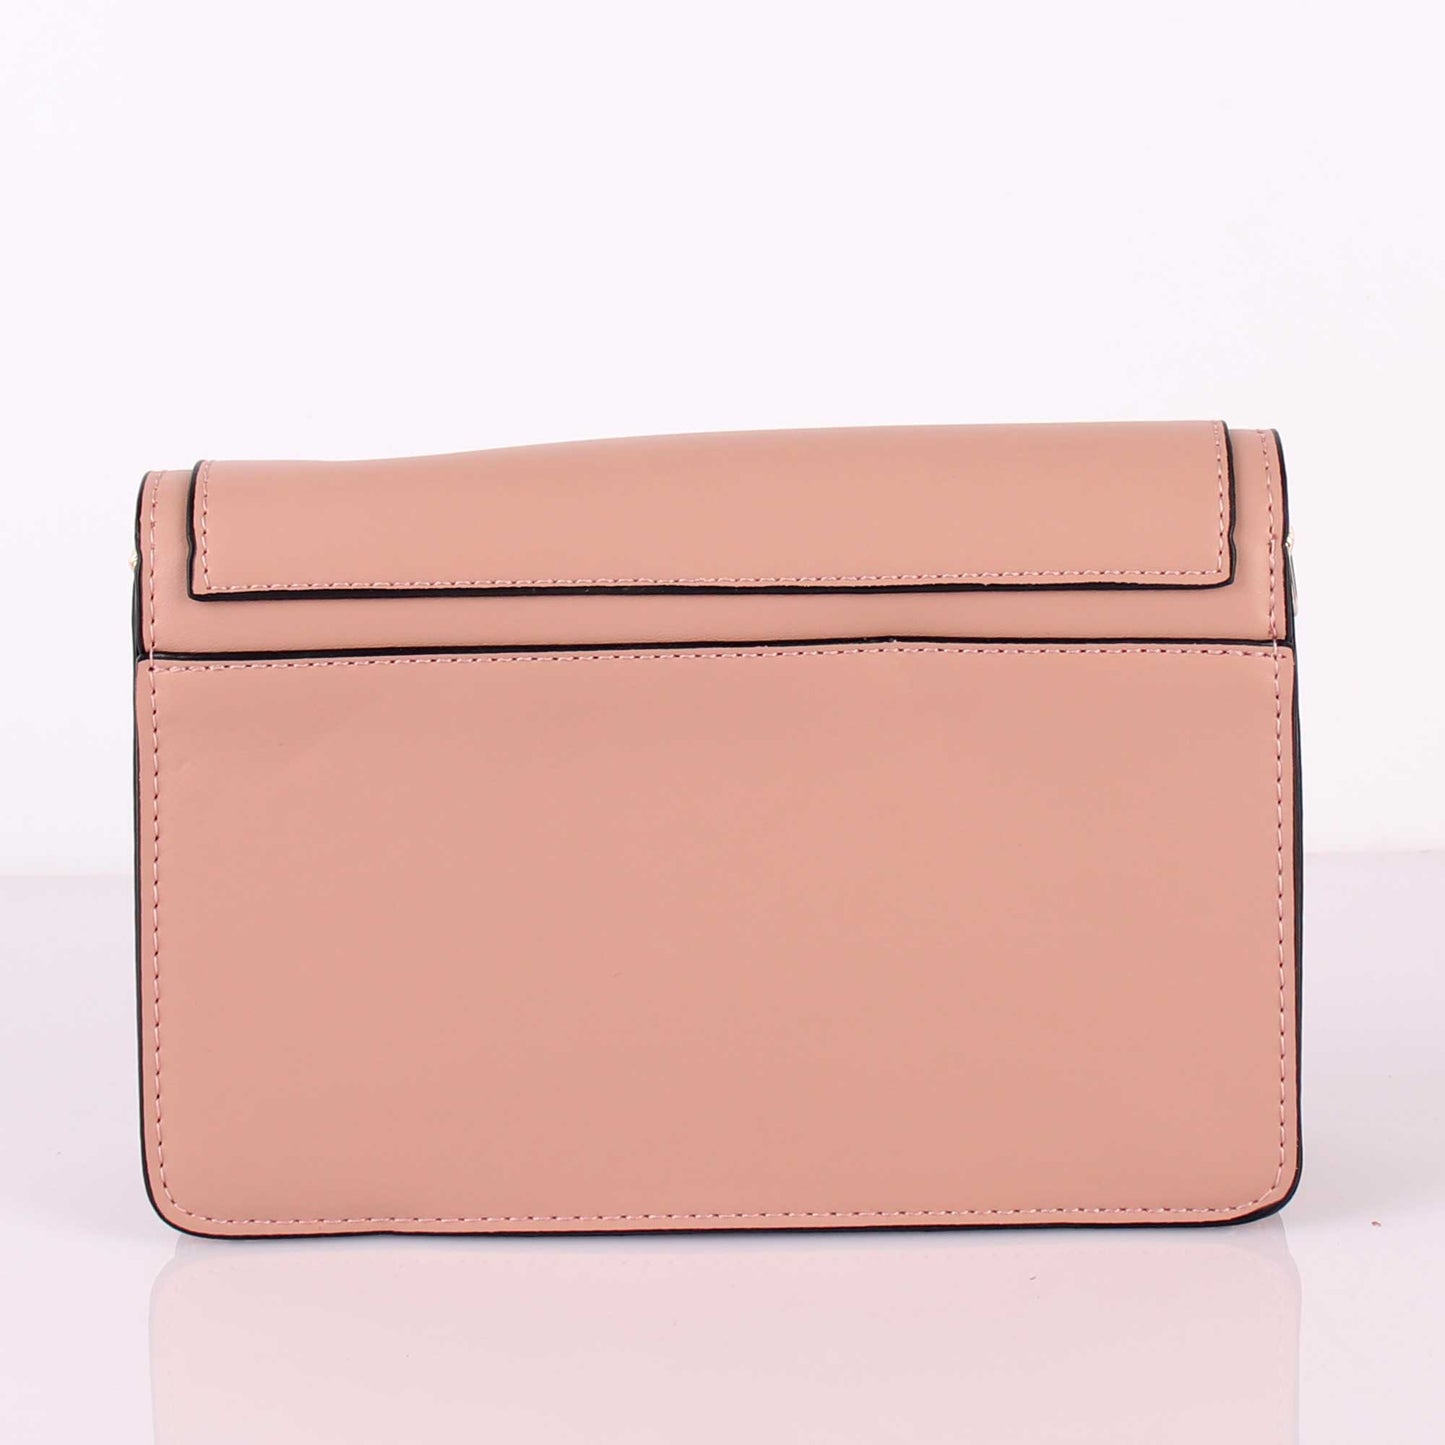 The Sassy Envelope Pink Sling Bag